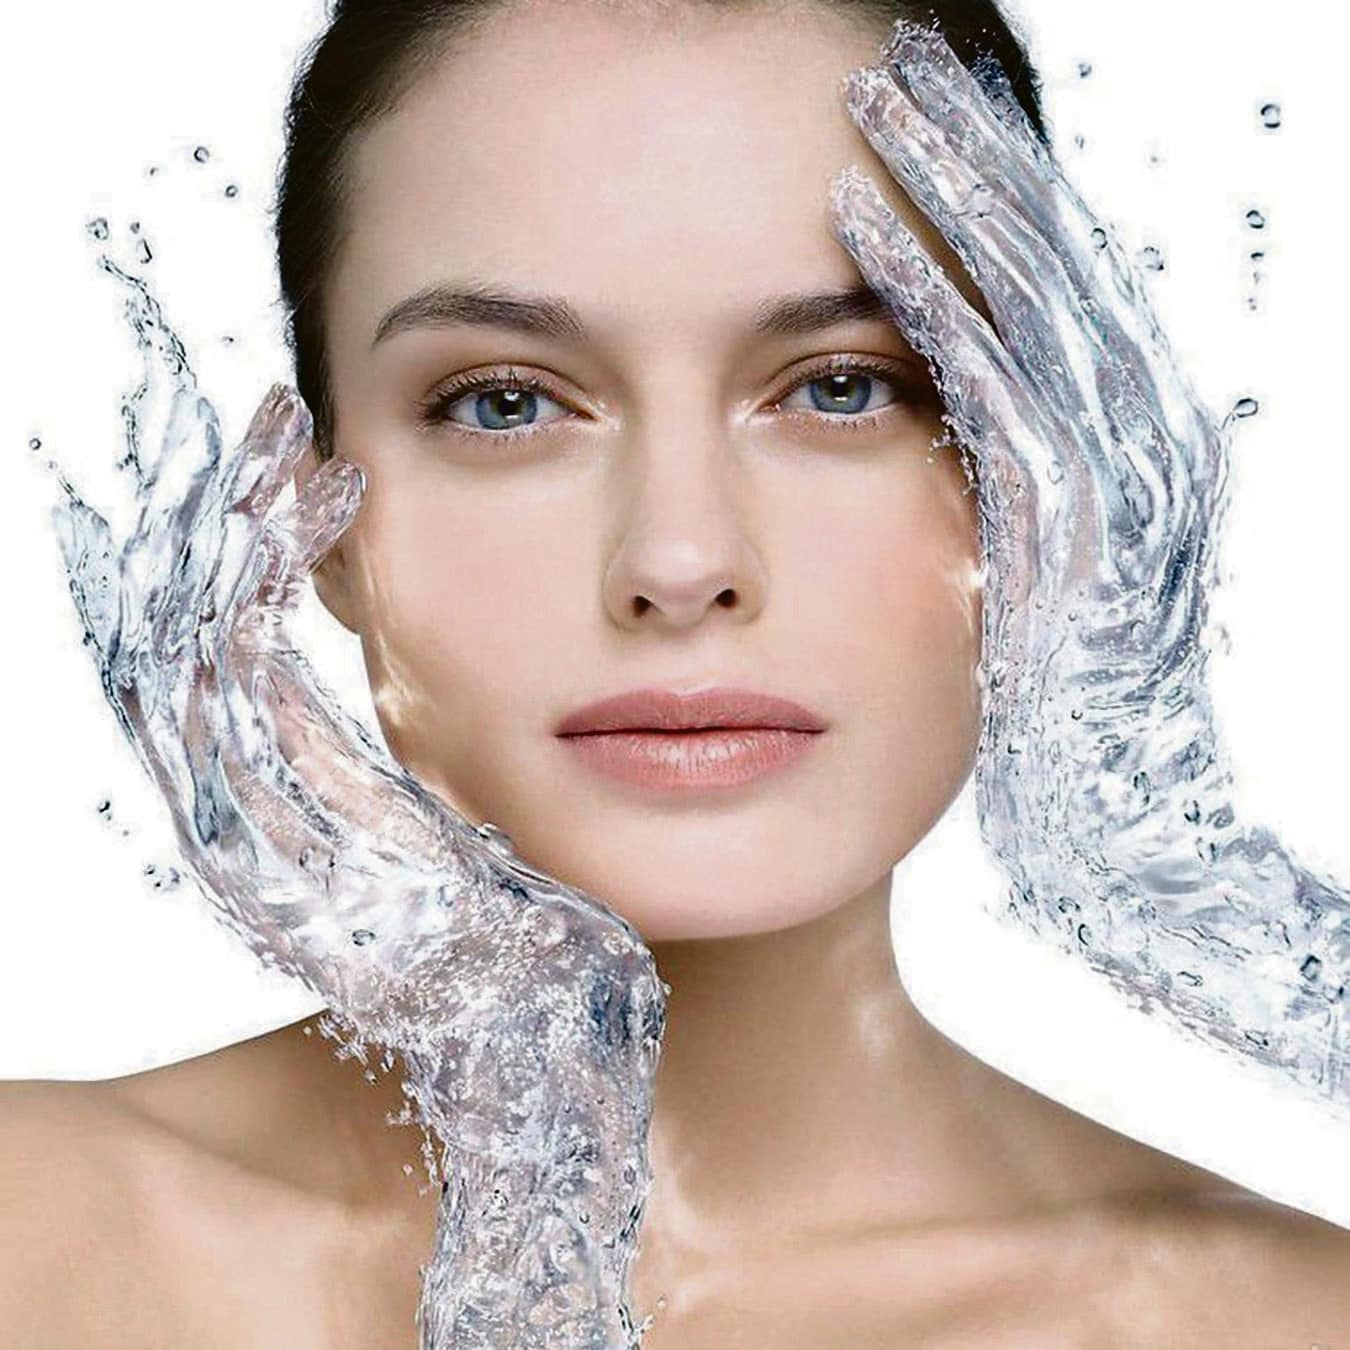 Aquapure - Único sistema de cuidado facial inteligente - Reference